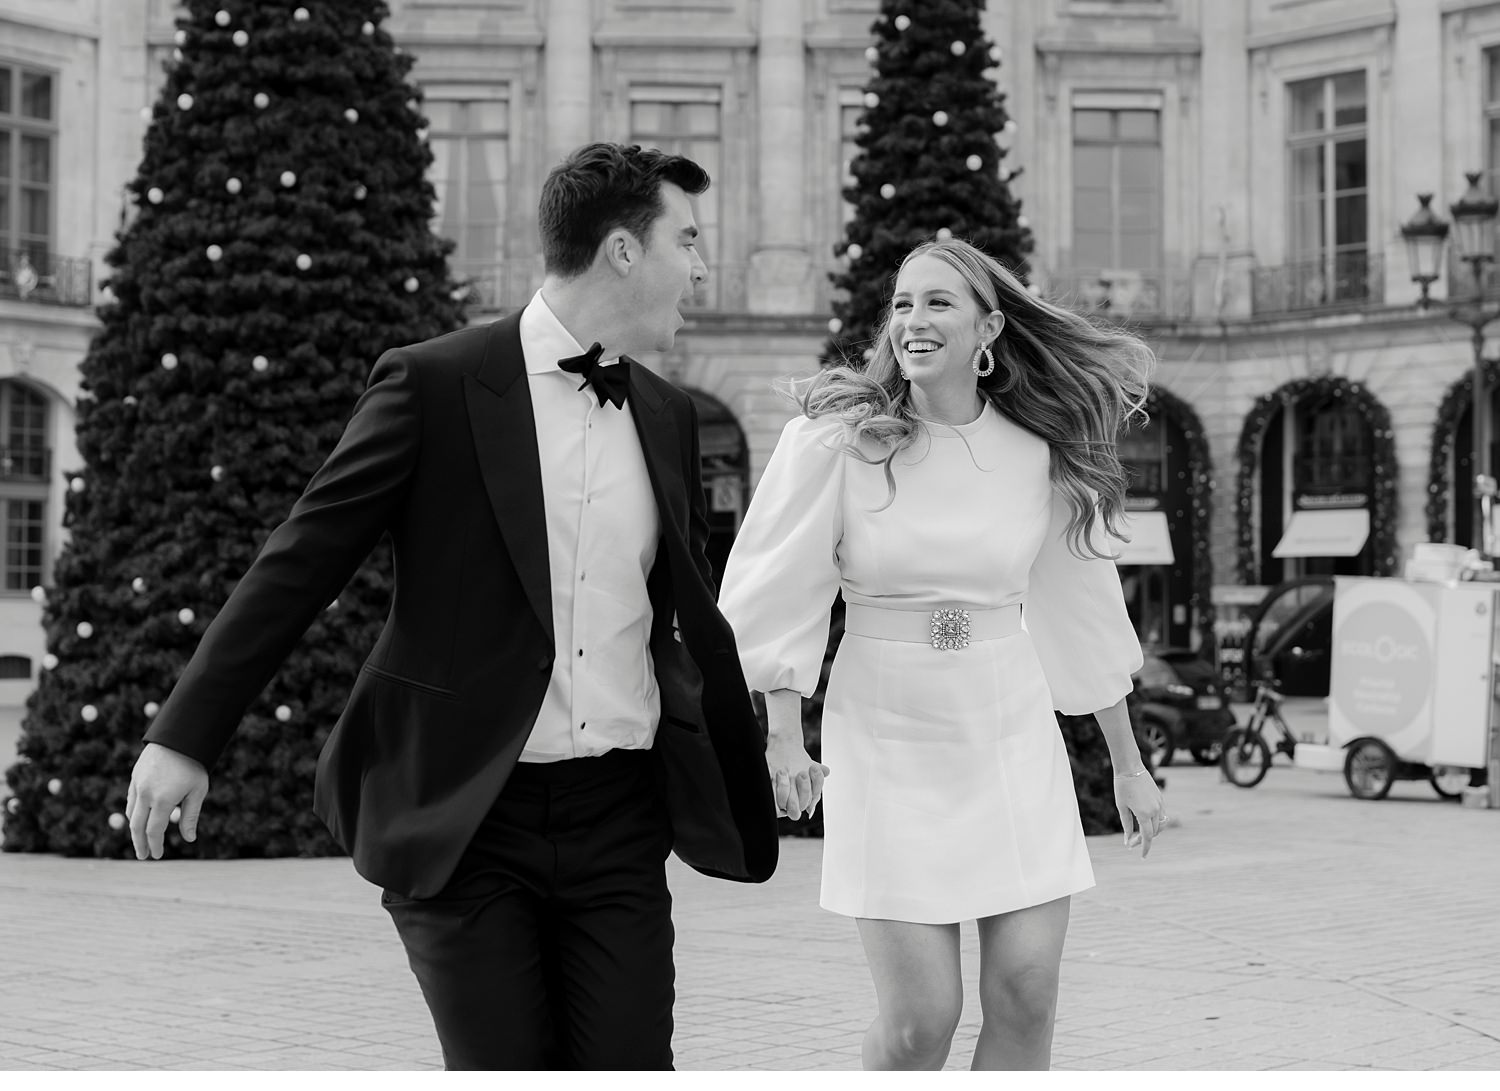 Christmas elopement in Paris, elope to paris, Claire Morris Photography, wedding photographer paris, elopement photographer paris, winter wedding paris,